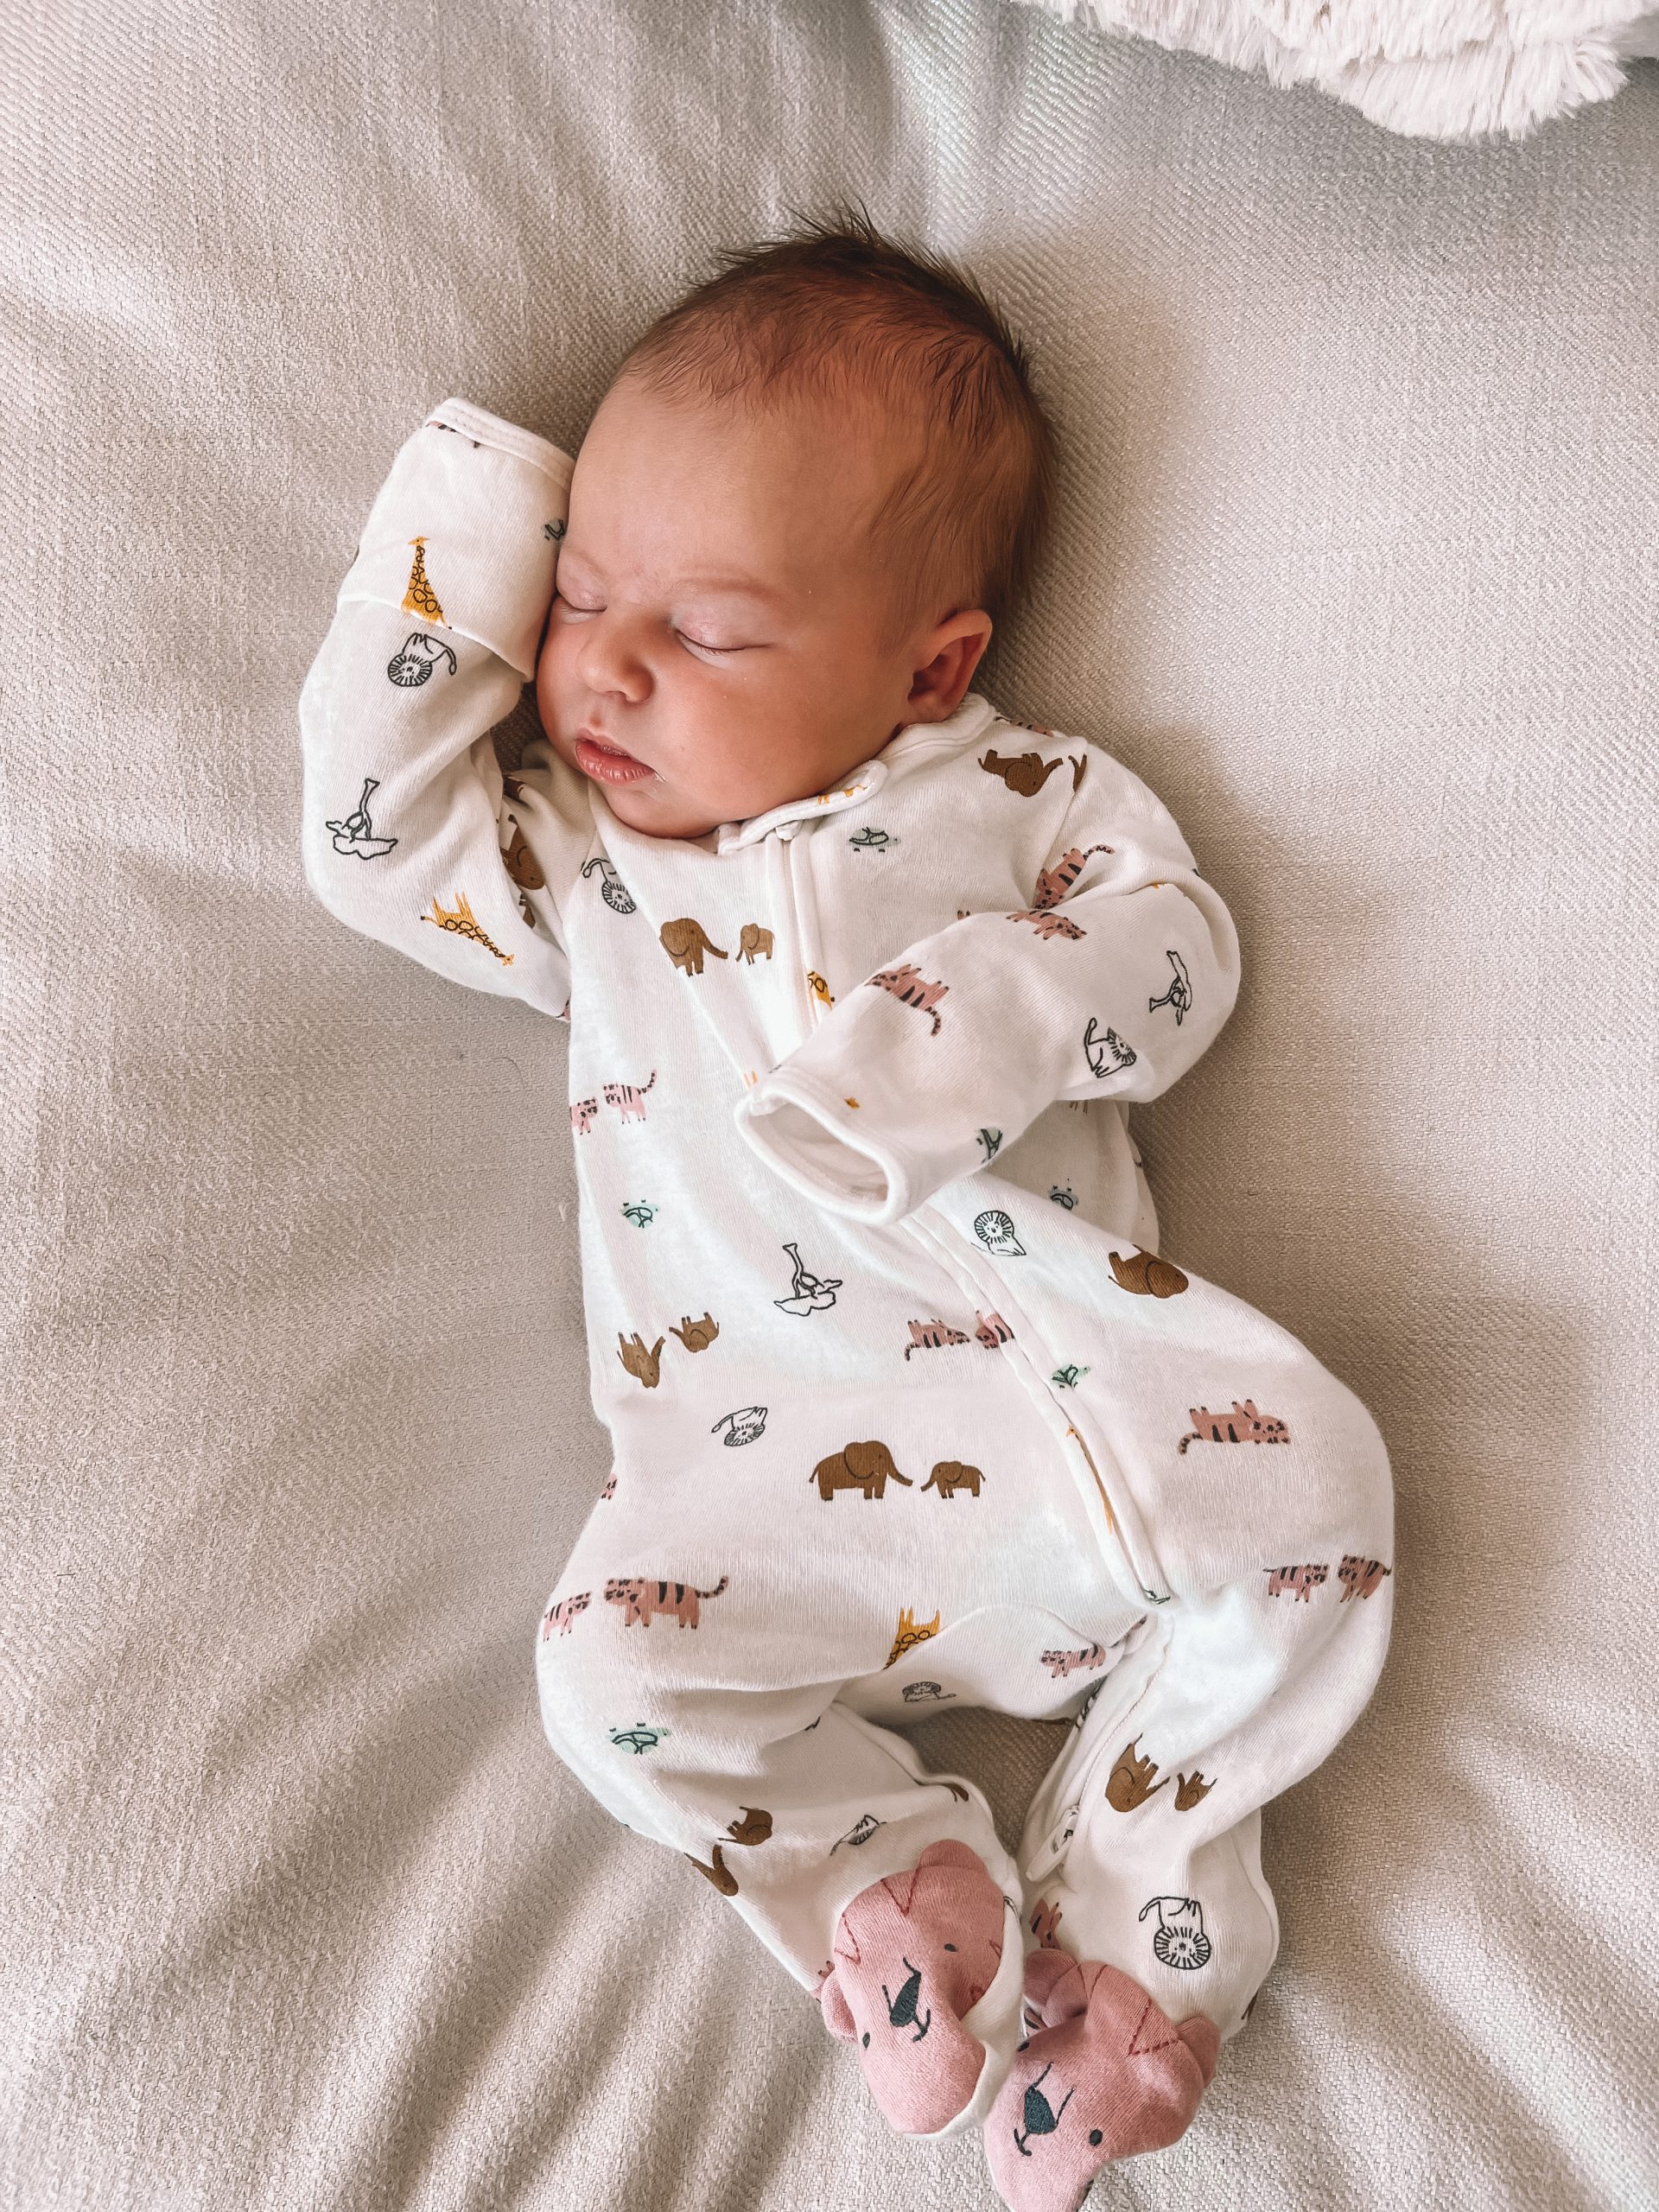 baby bedtime routine, newborn